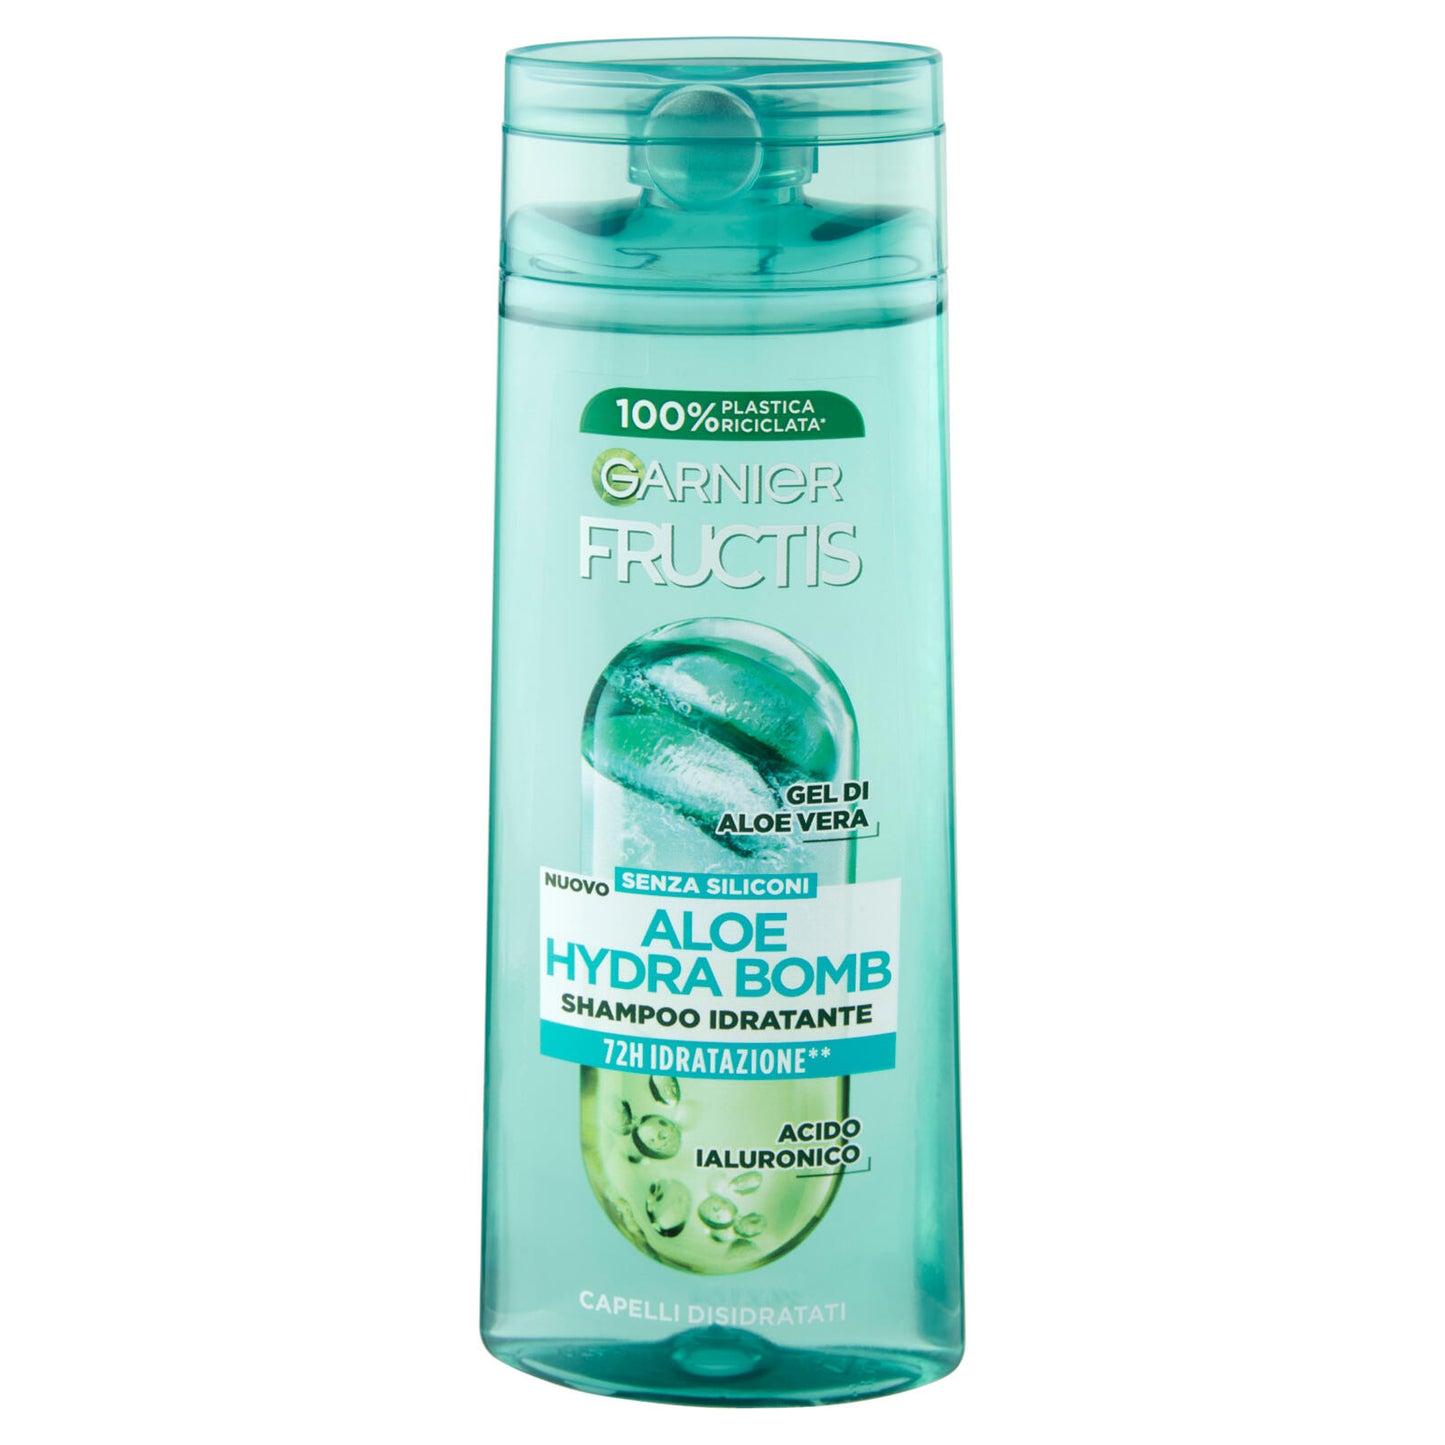 Garnier Fructis Shampoo Aloe Hydra Bomb, shampoo idratante per capelli disidratati, 250 ml